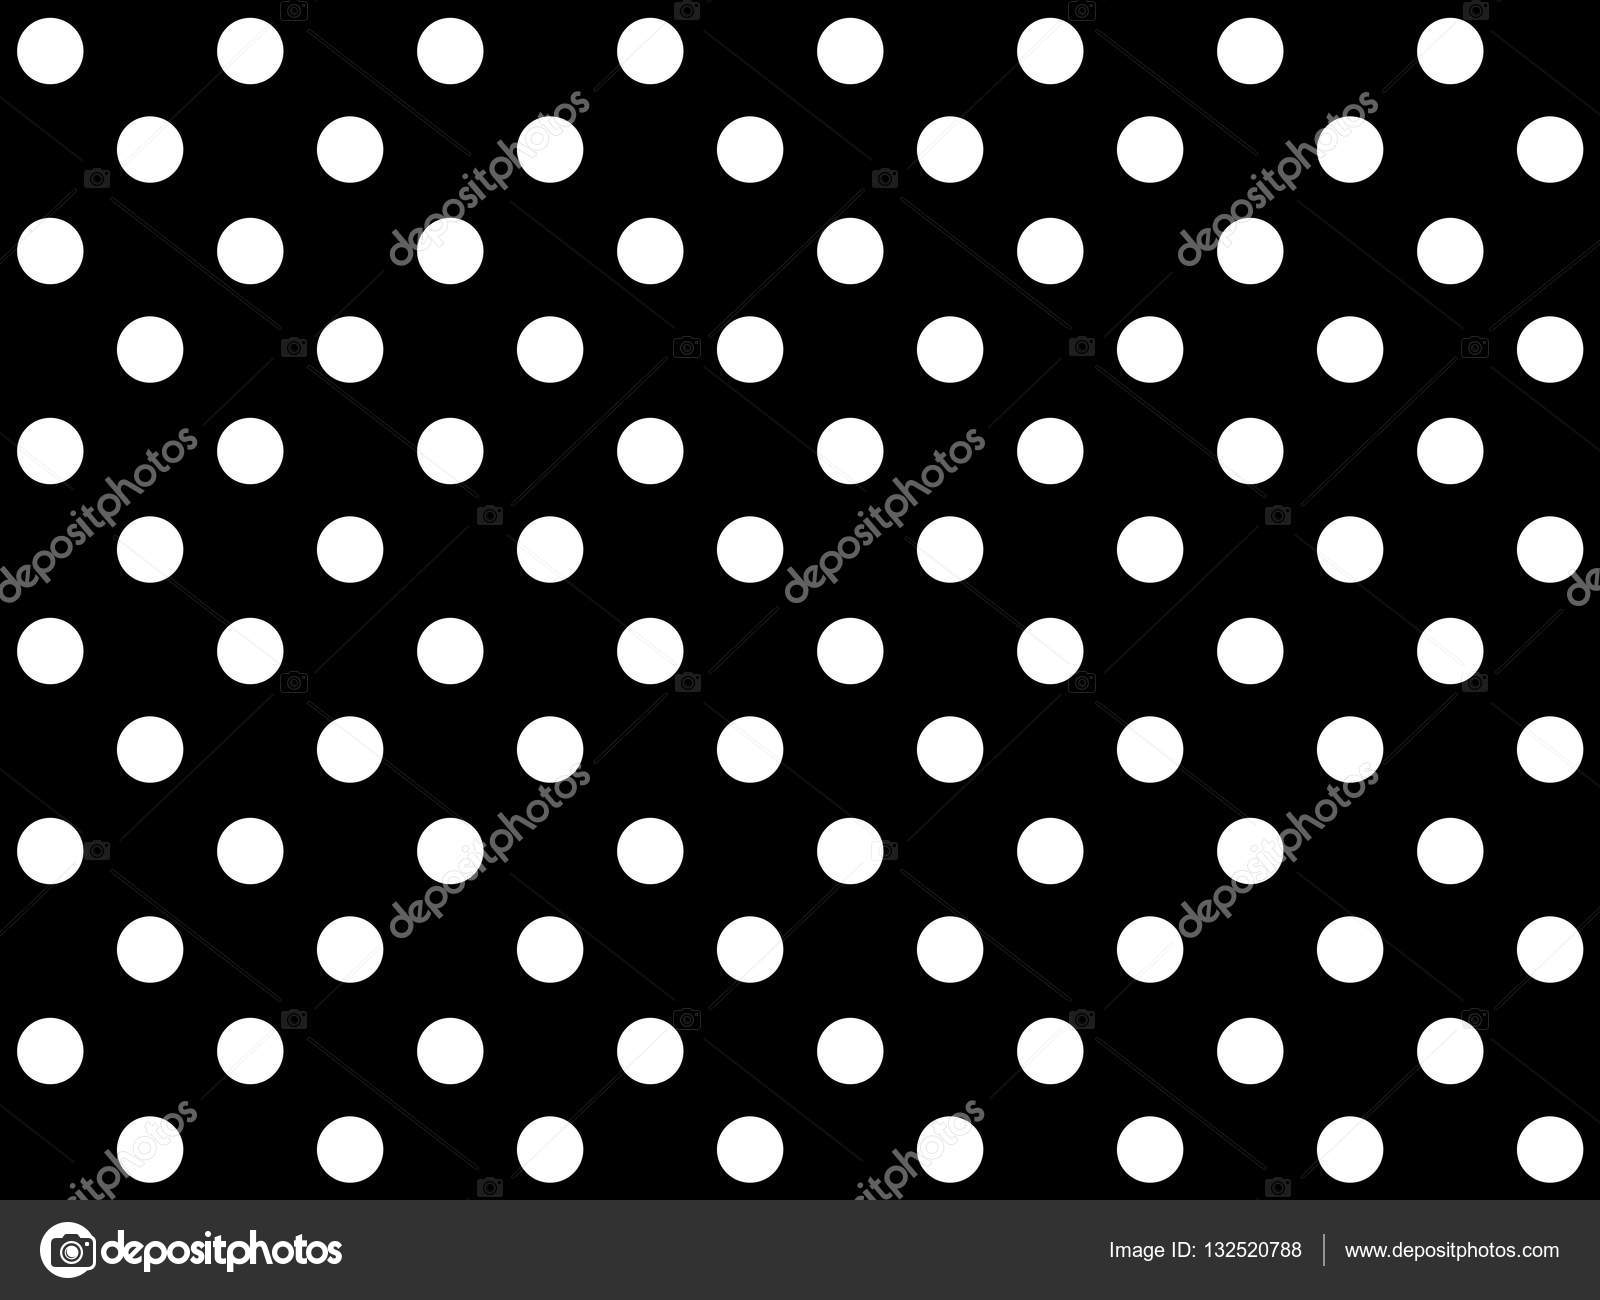 White dots on a black background Stock Photos, Royalty Free White dots on a black  background Images | Depositphotos